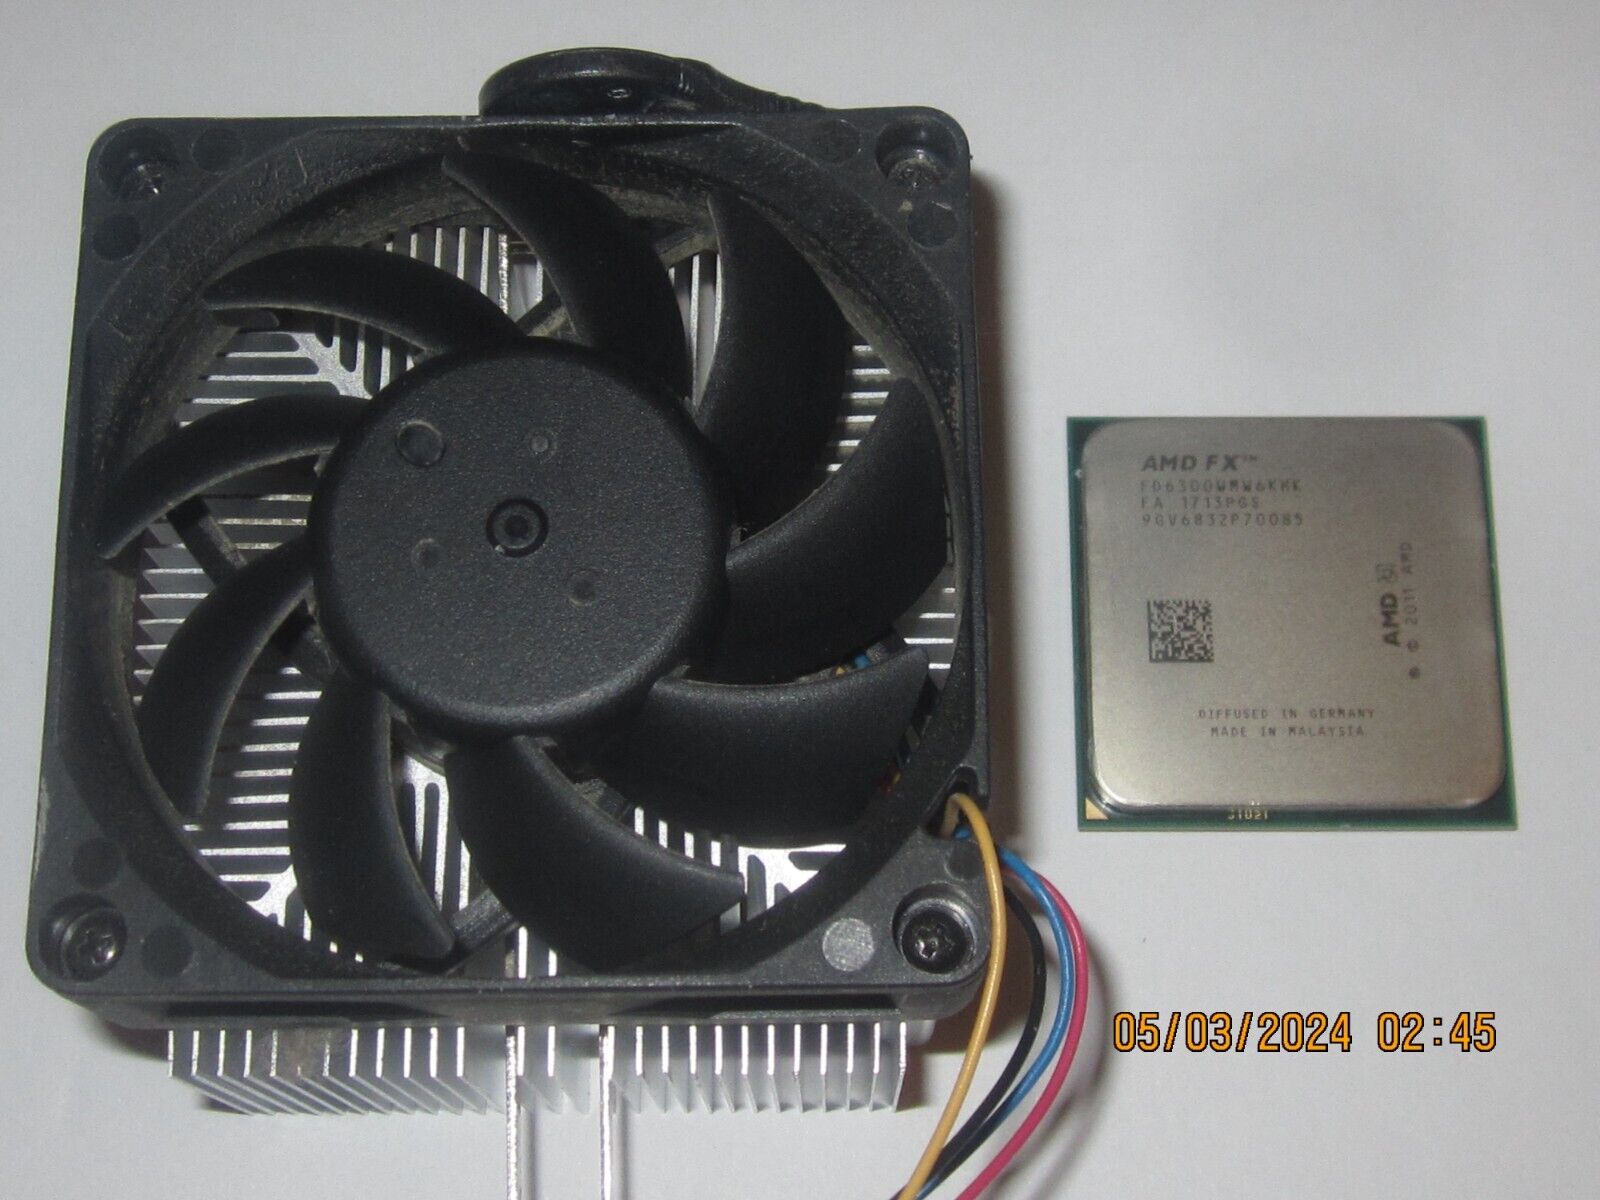 AMD FX-6300 AM3 4.1GHz Boost Six Core Processor FD6300WMW6KHK WITH HEAT SINK